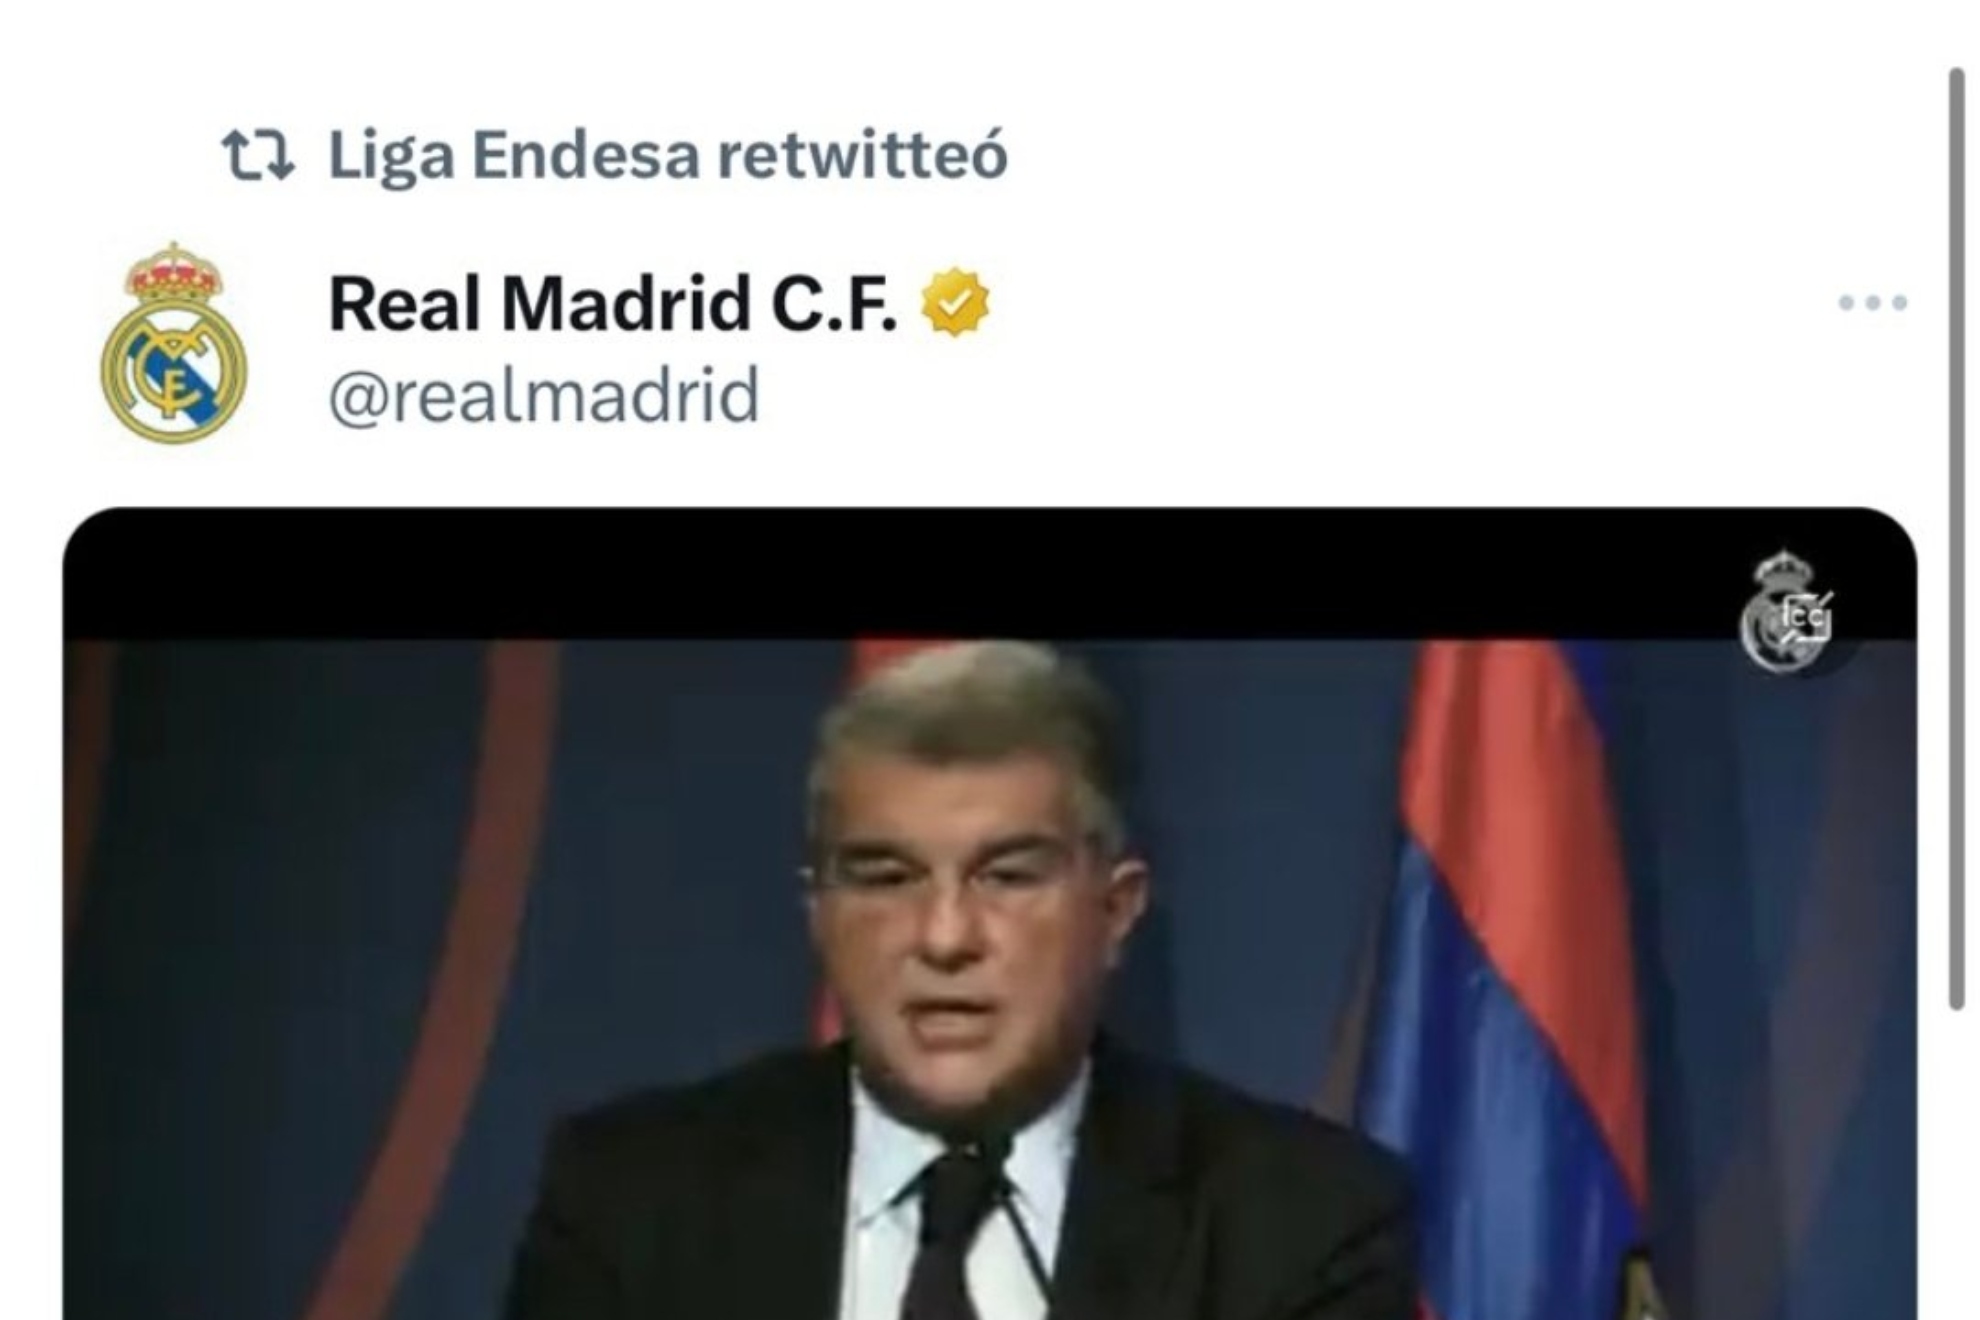 La ACB se disculpa por retuitear el vdeo del Real Madrid contra Laporta